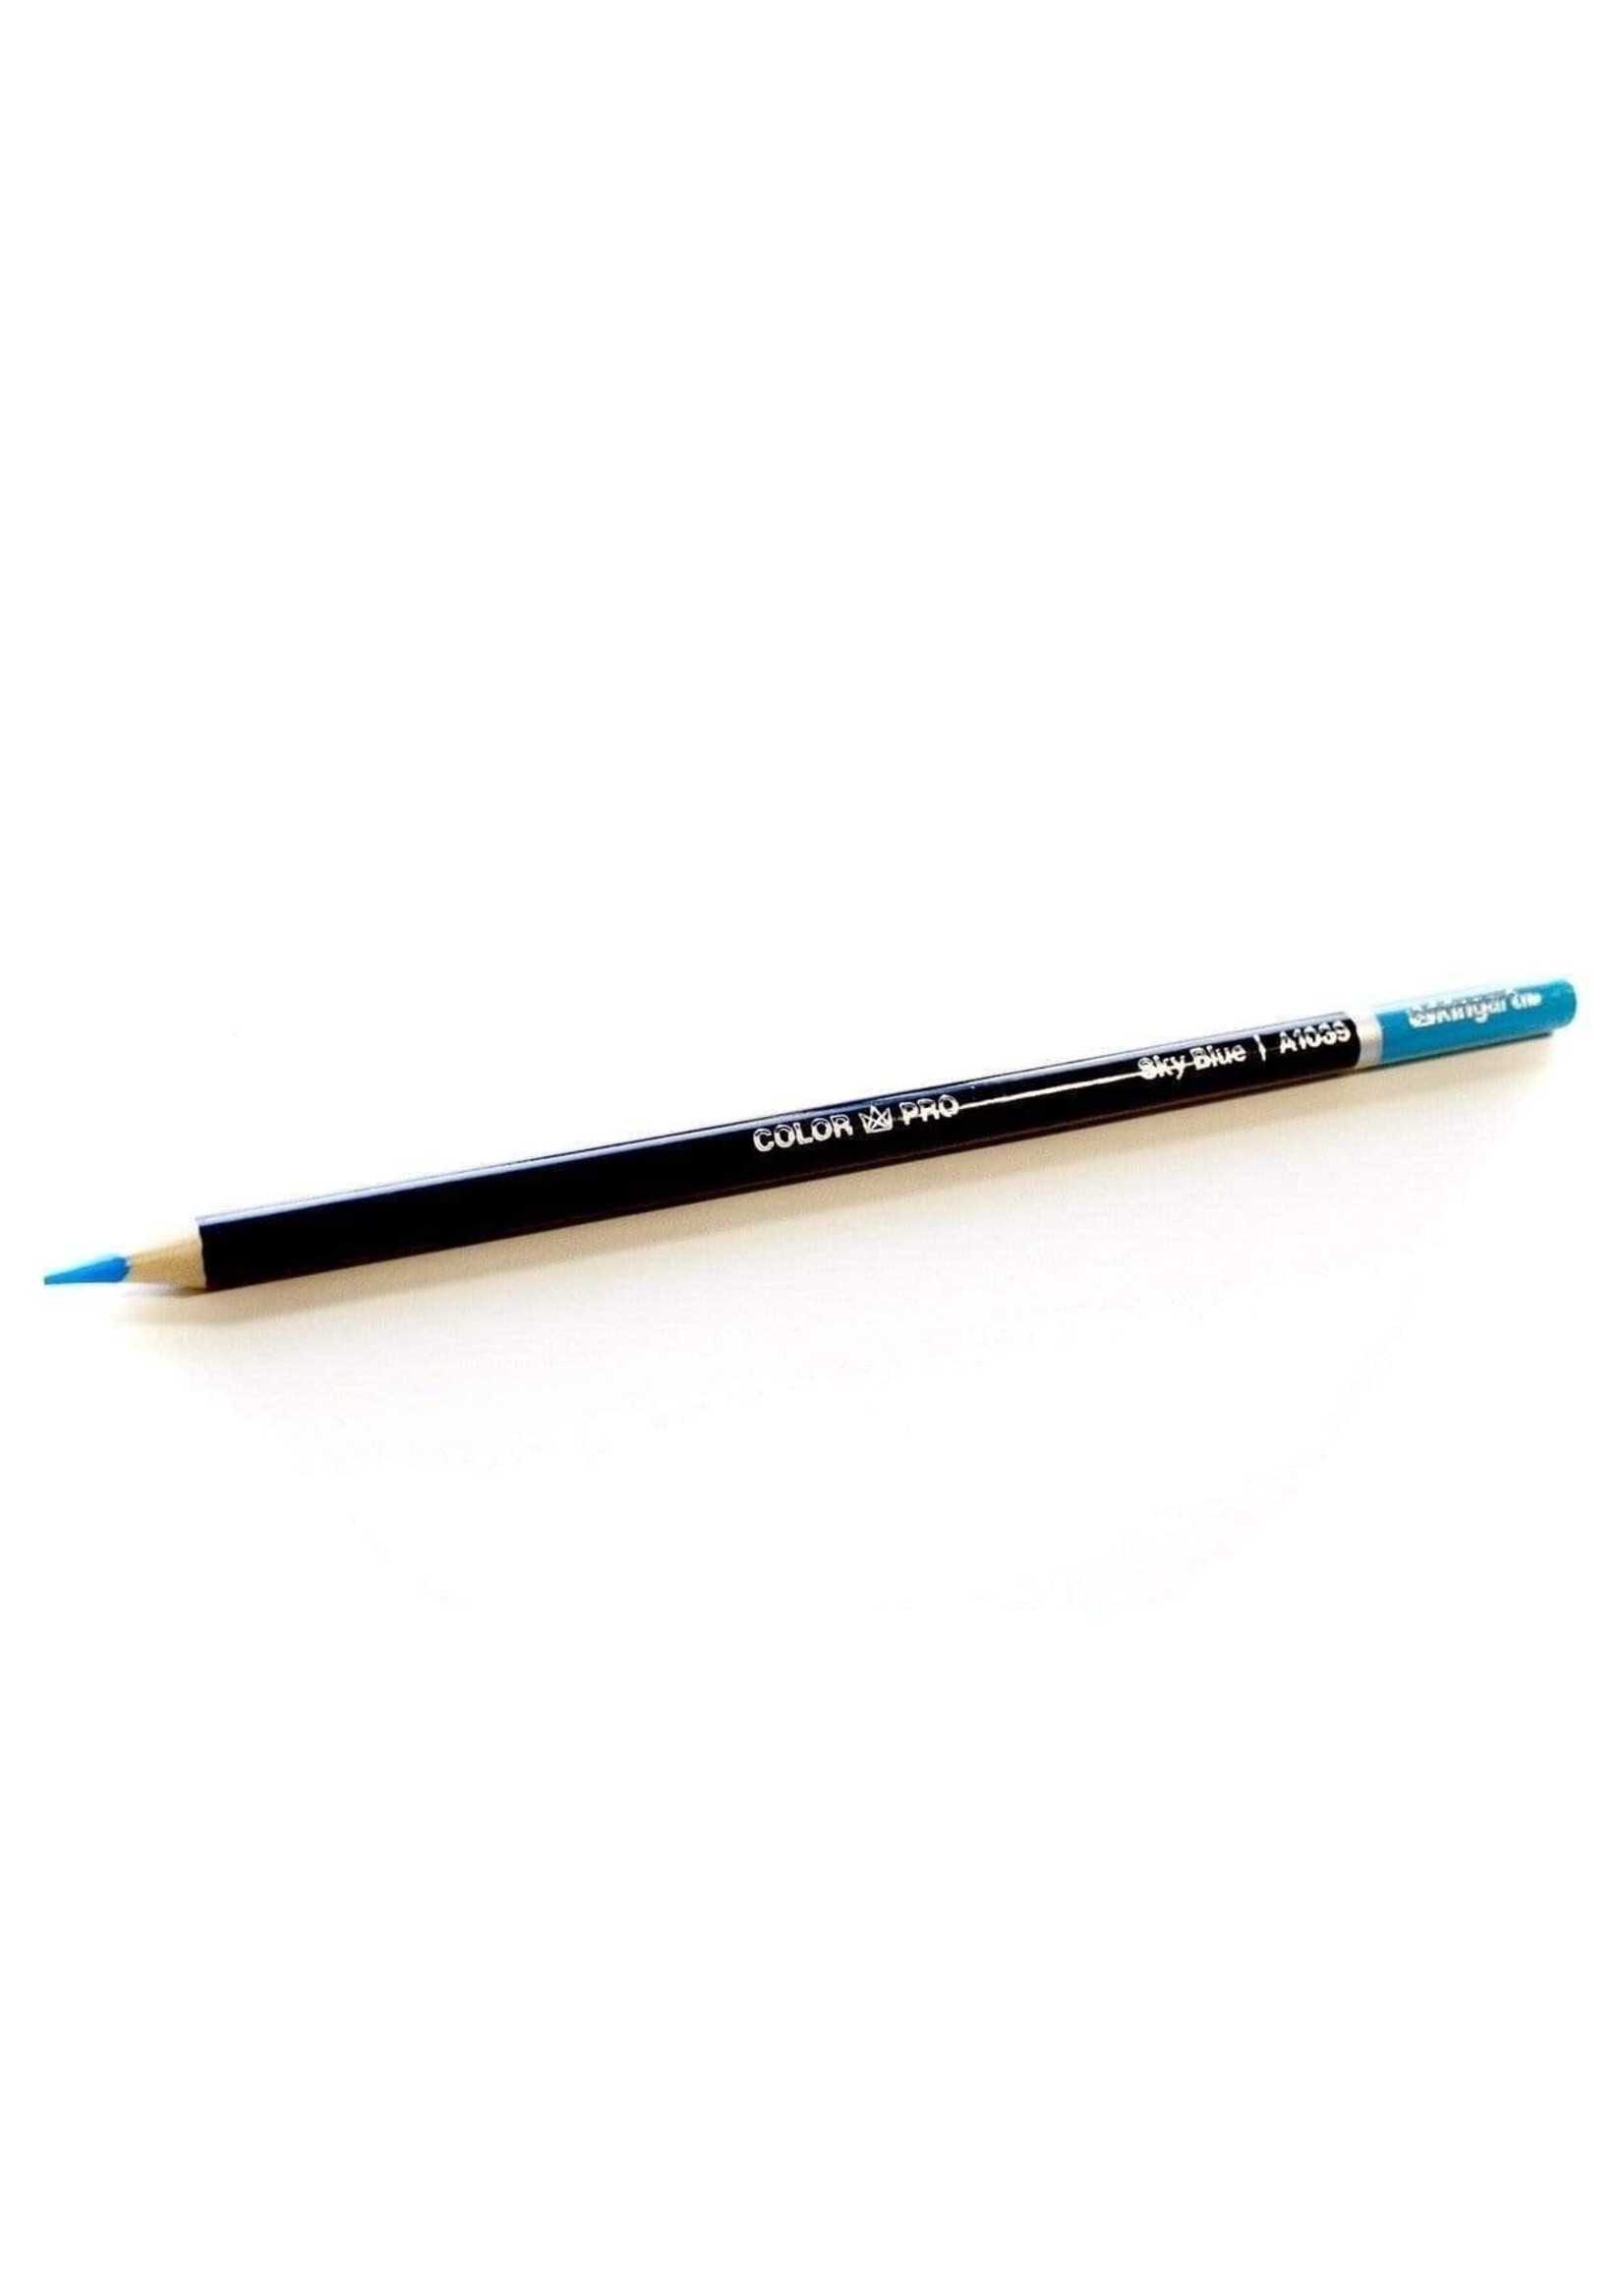 Kingart Soft Core Colored Pencils in Tin - 24 Unique Colors